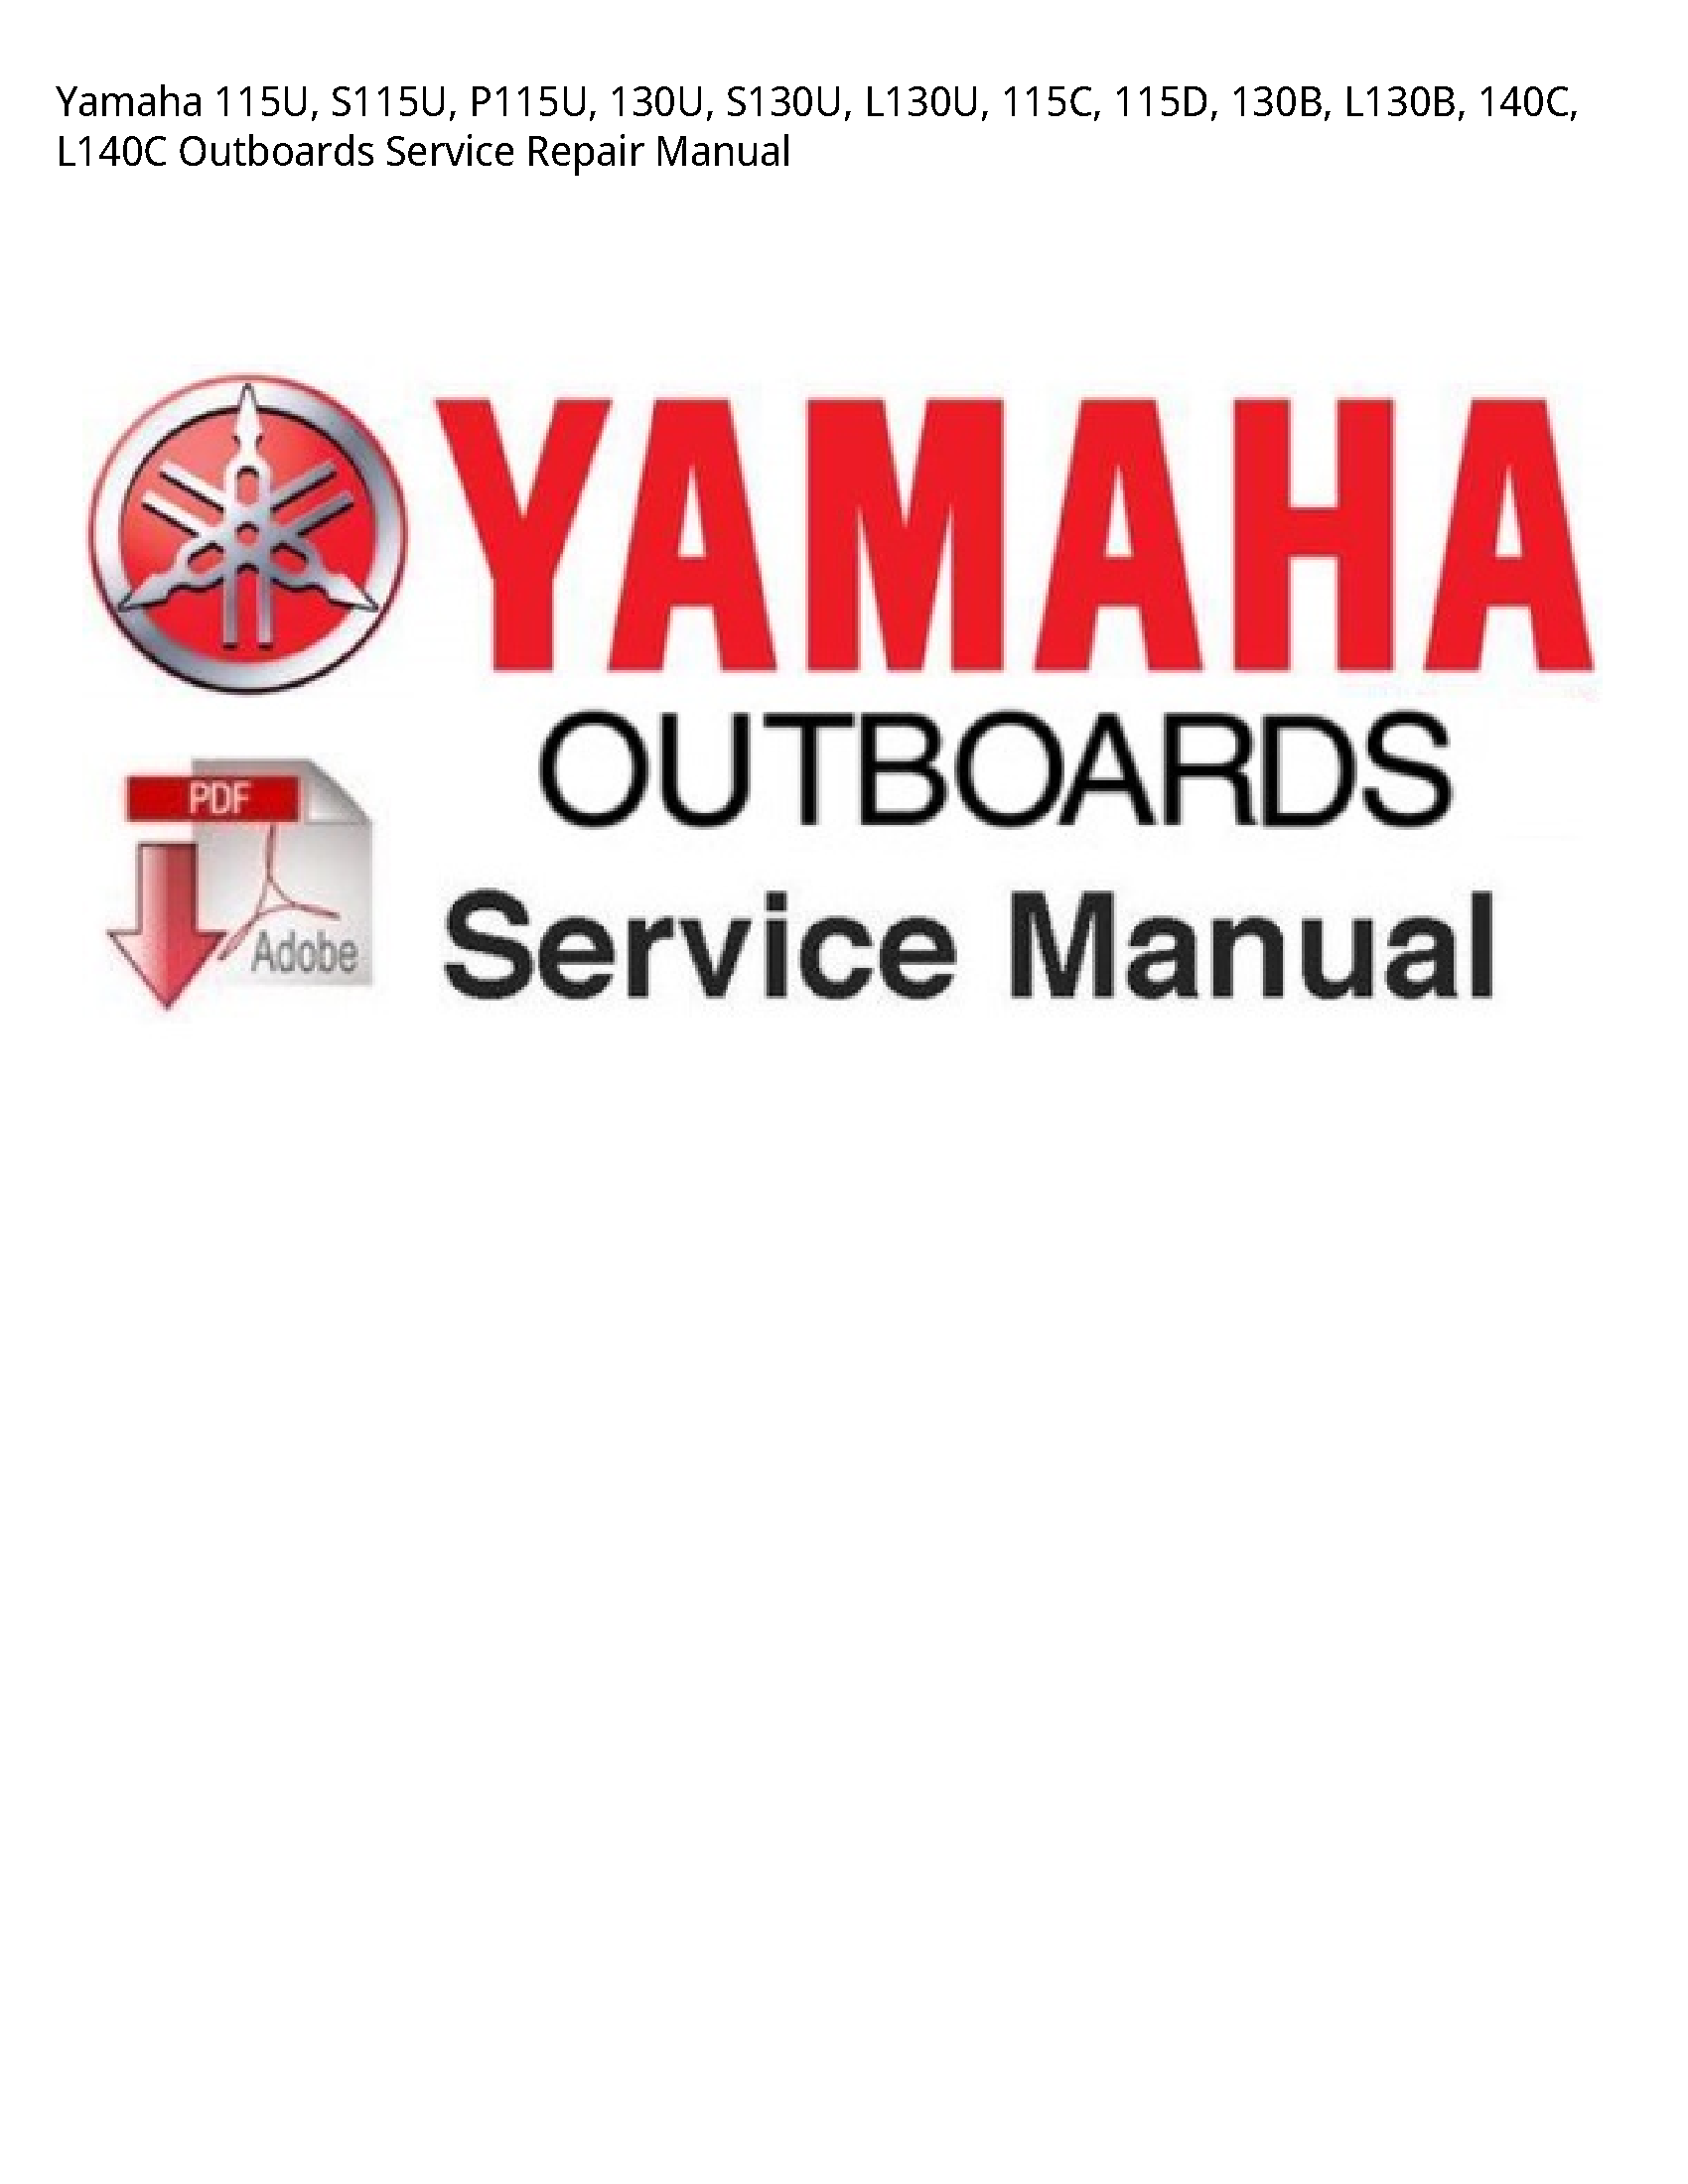 Yamaha 115U Outboards manual